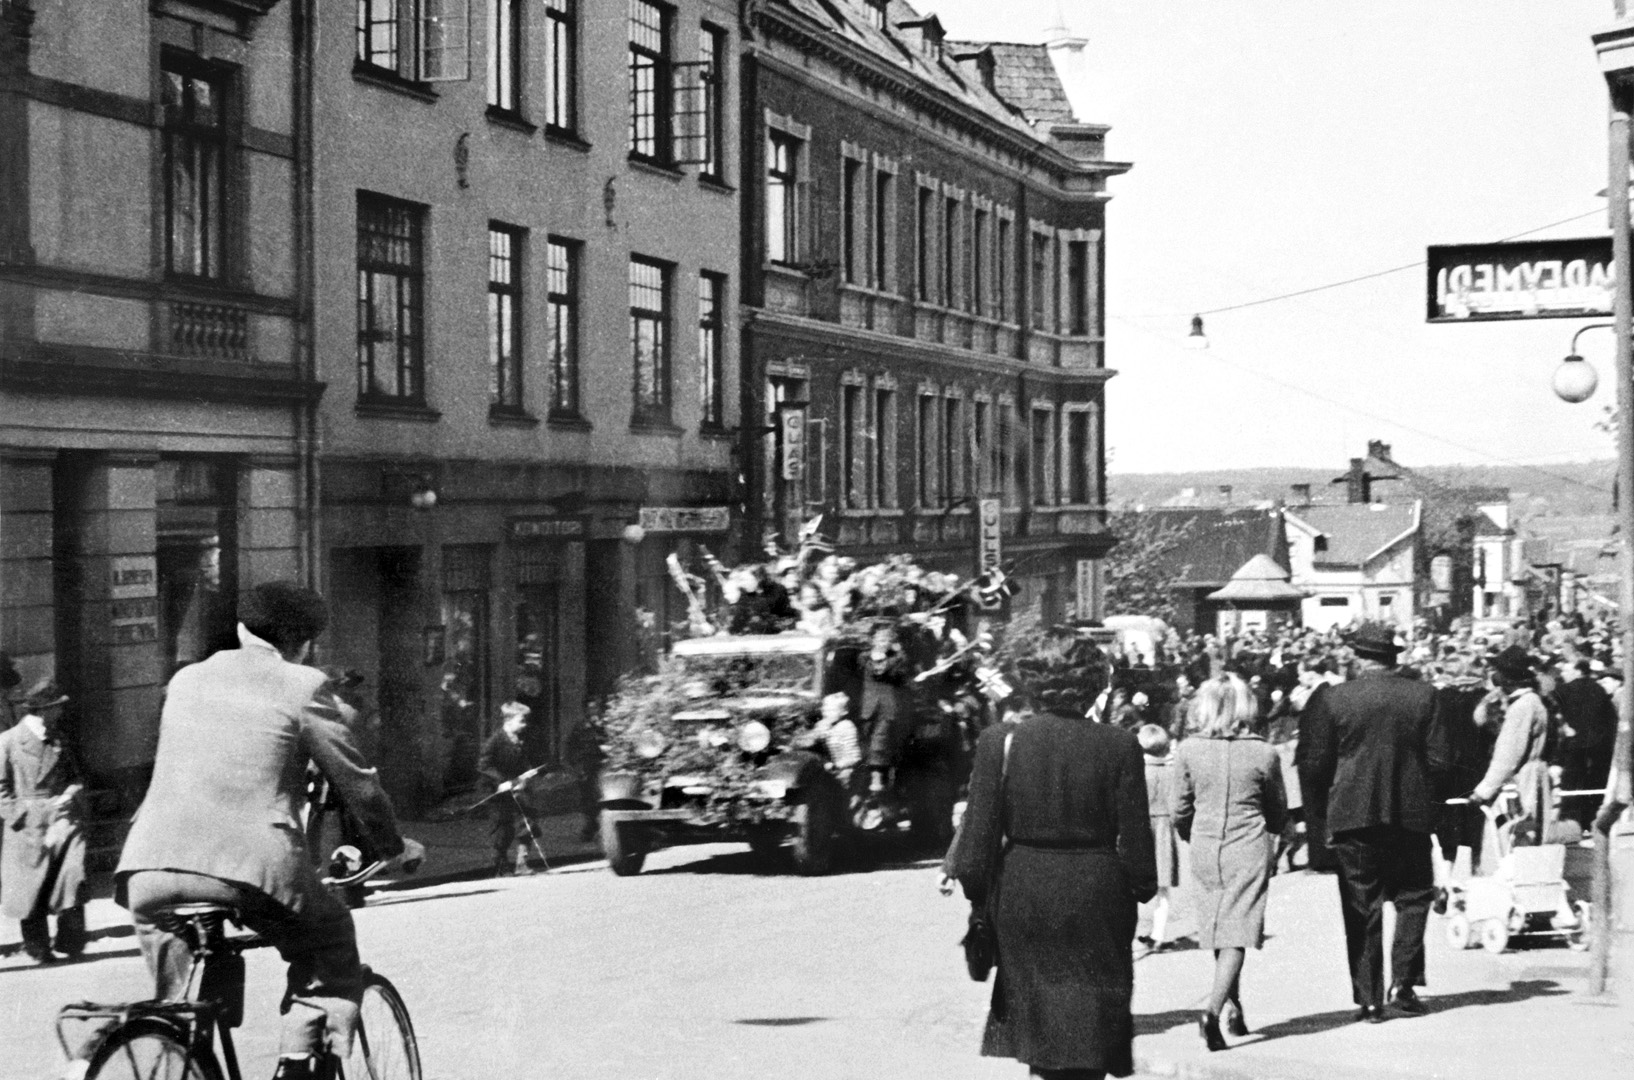 ØFB.1979-00116 Fredsbegeistring i Sarpsborg 8. mai 1945, reservepolitiet kommer hjem fra Sverige. Foto: Rolv Bjøreid / Østfold fylkes billedarkiv.